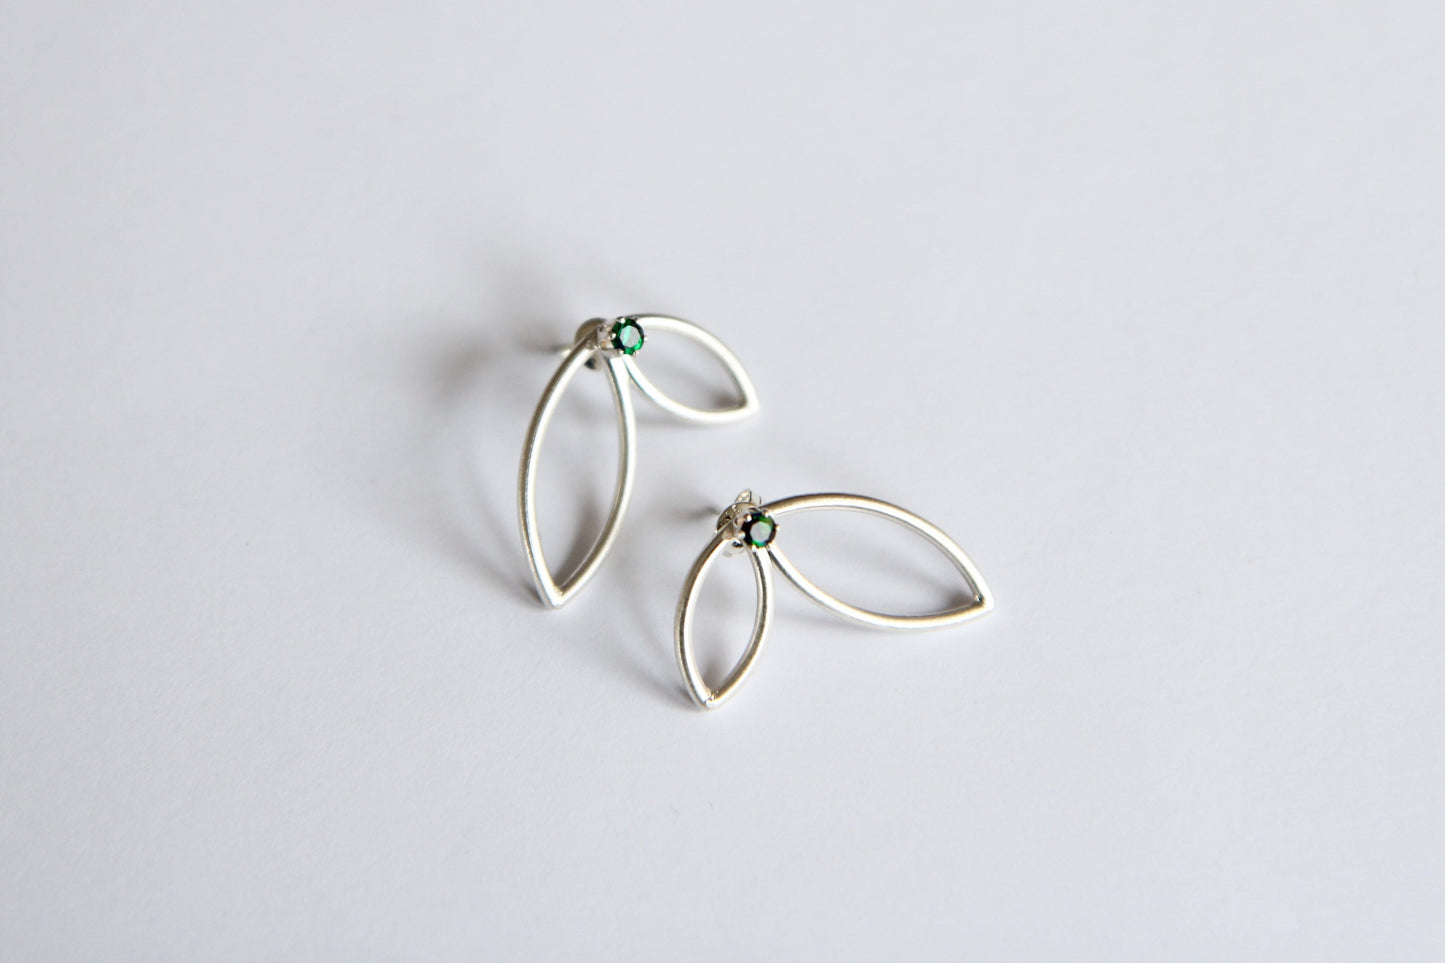 Botanical Silver Earrings With Zircon